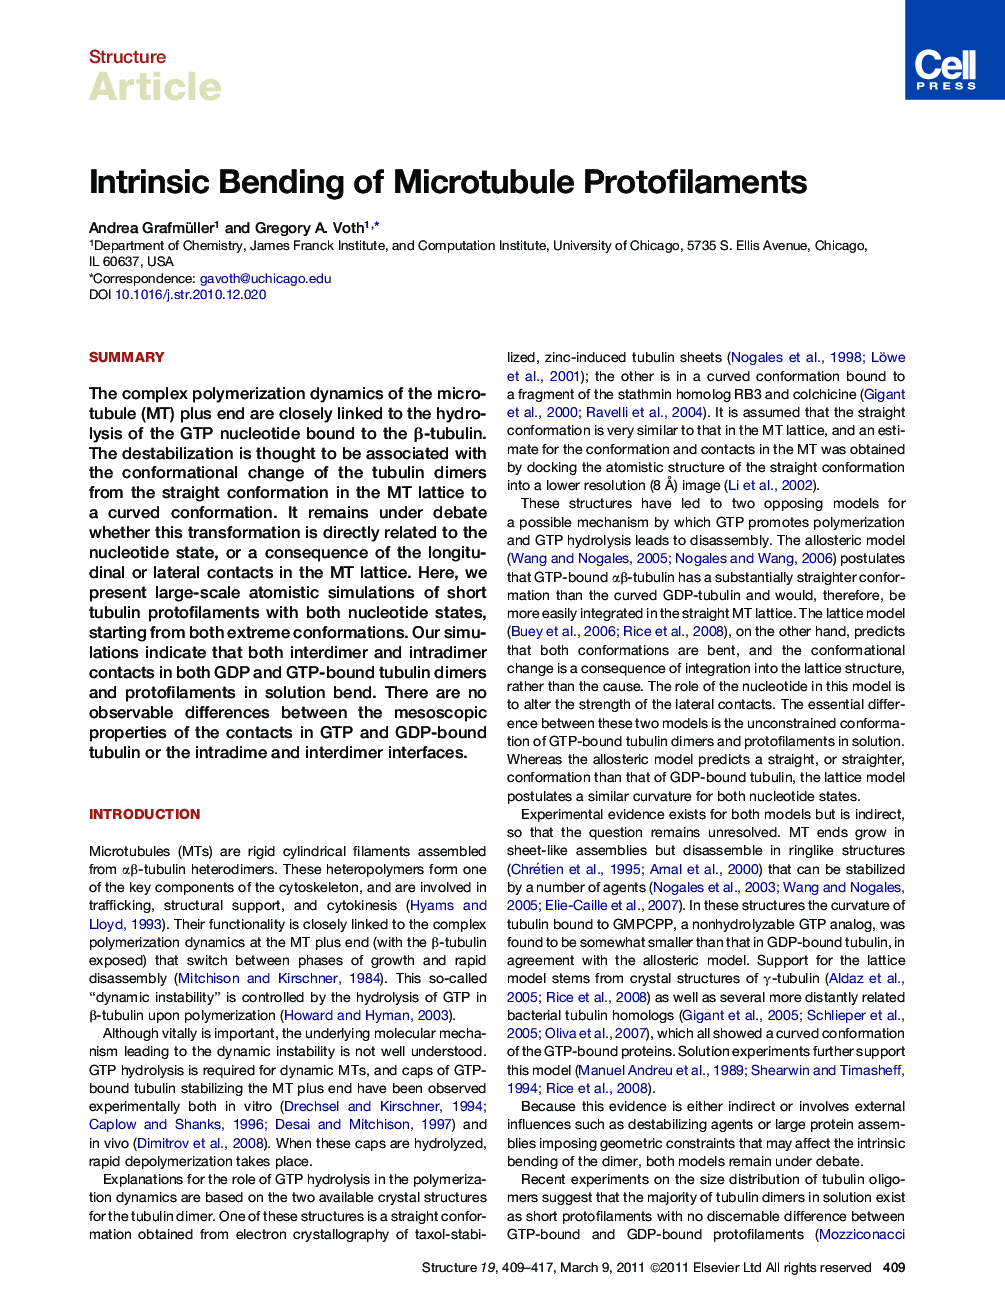 Intrinsic Bending of Microtubule Protofilaments